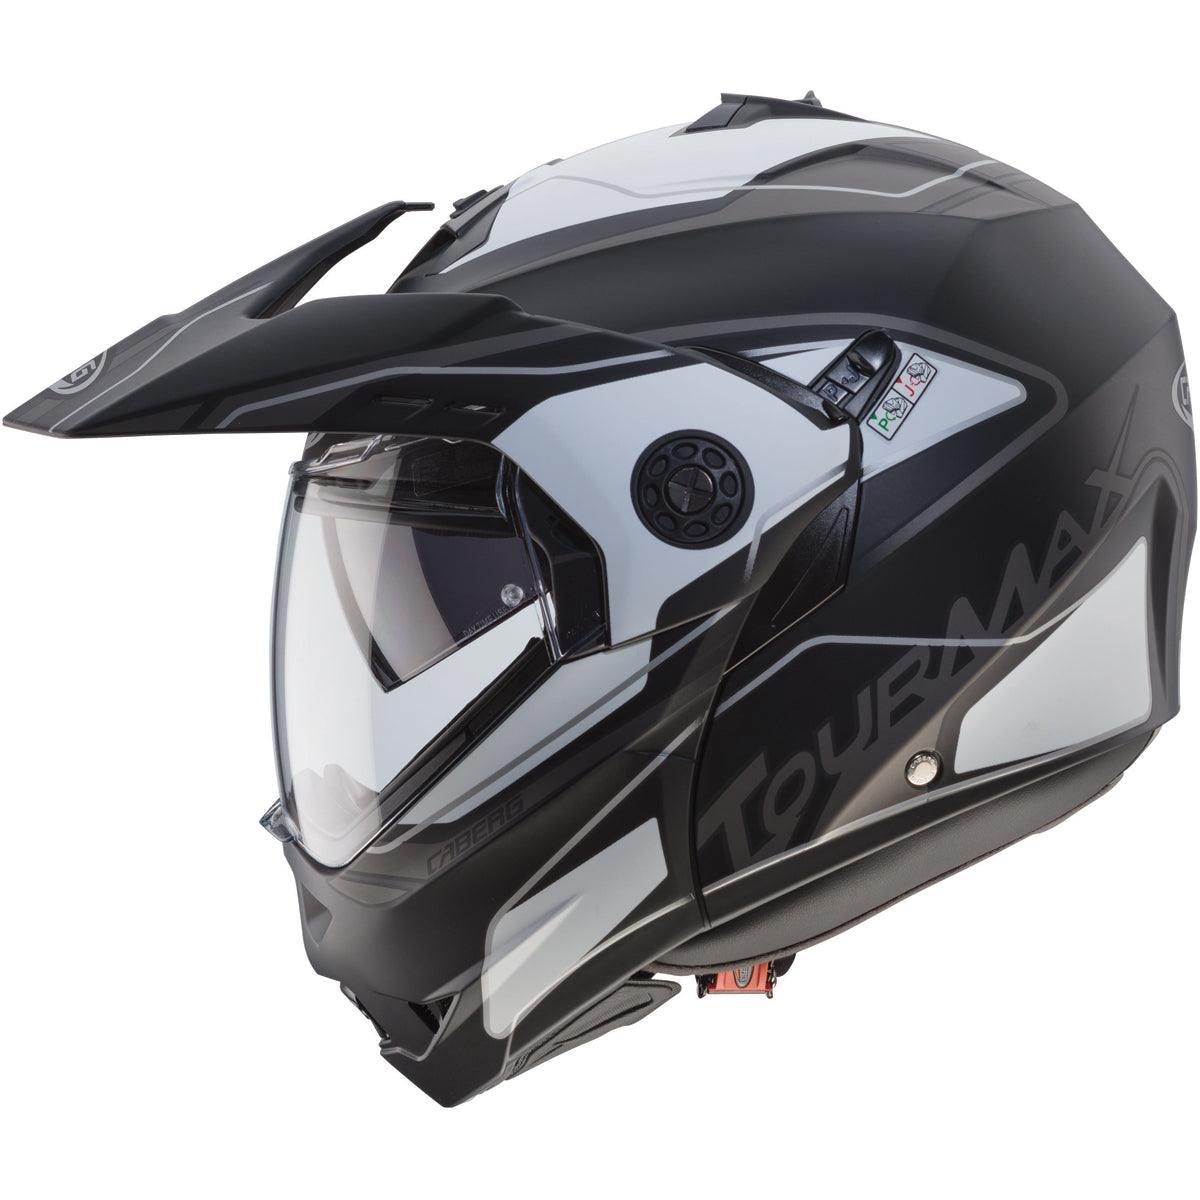 Caberg Tourmax Marathon Helmet - Black White Anthracite - getgearedshop